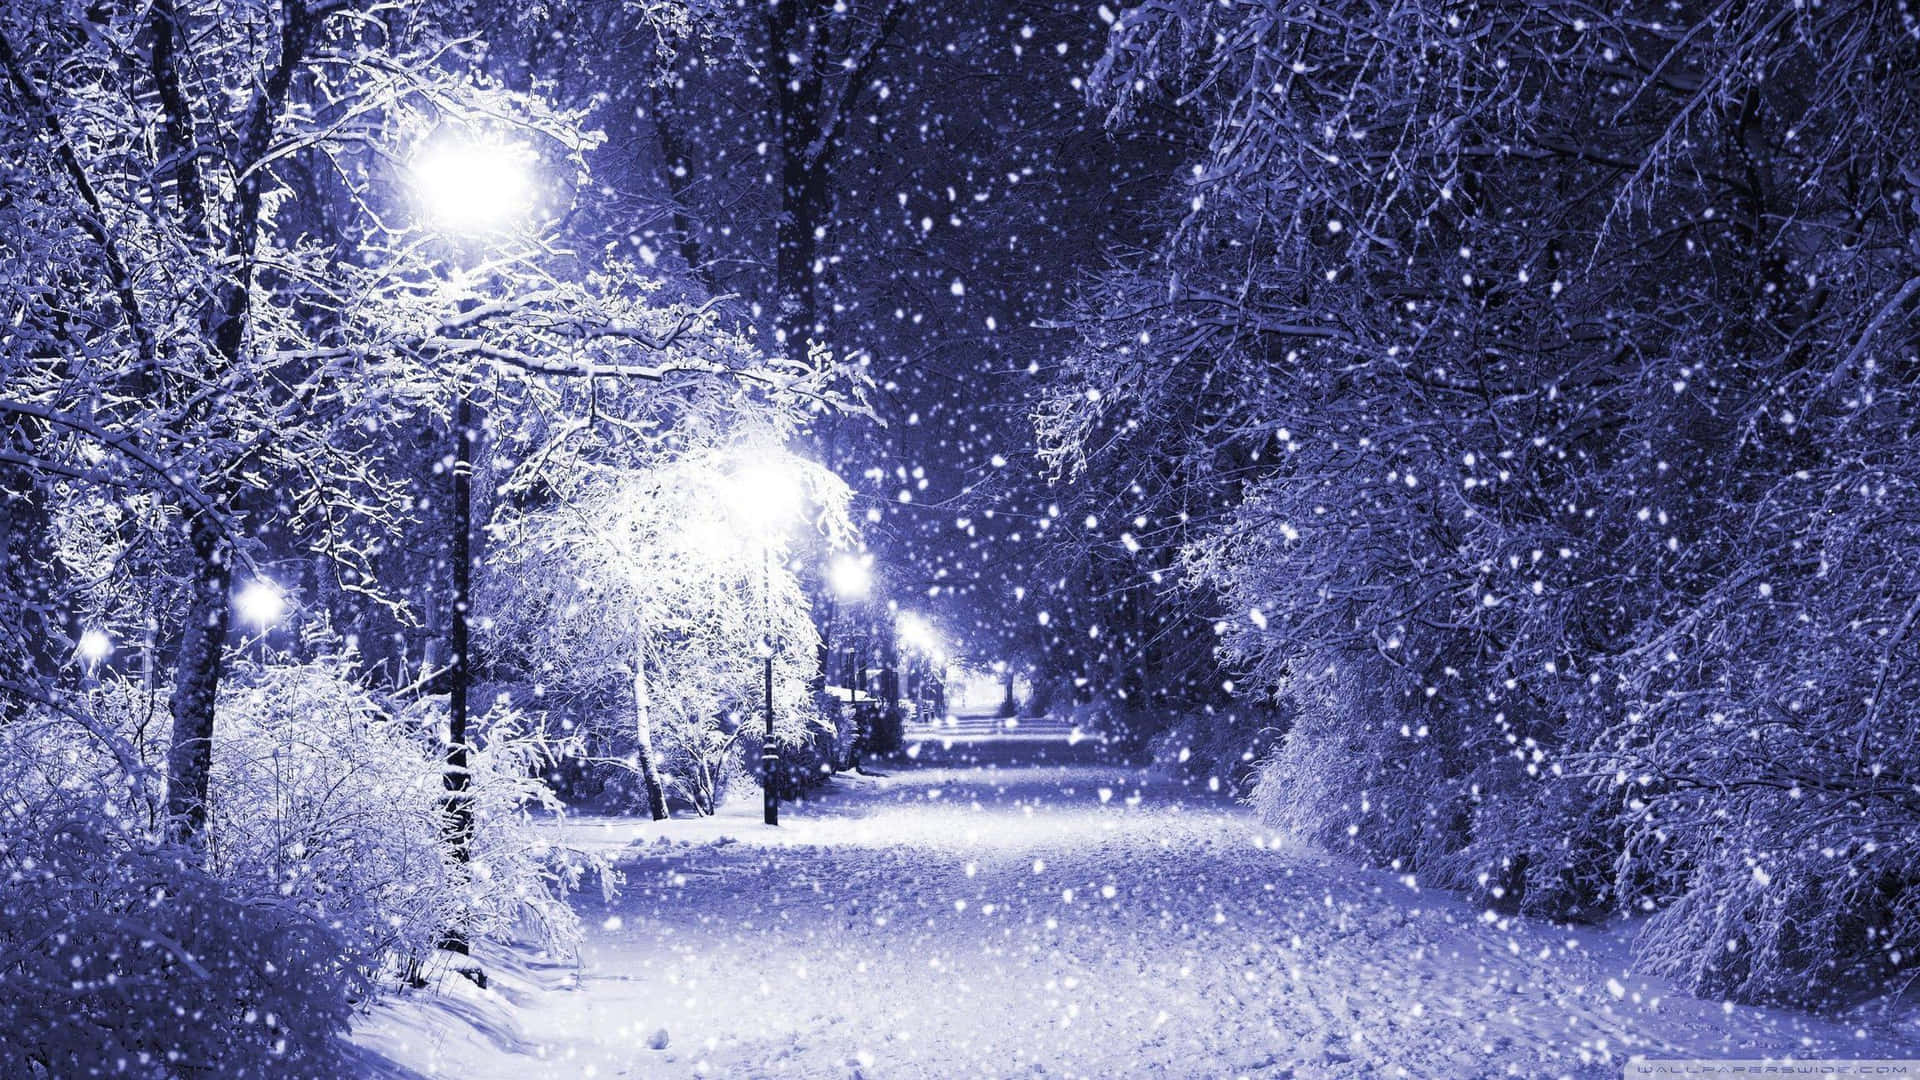 Let the Winter Wonderland Magic Shine this Christmas! Wallpaper